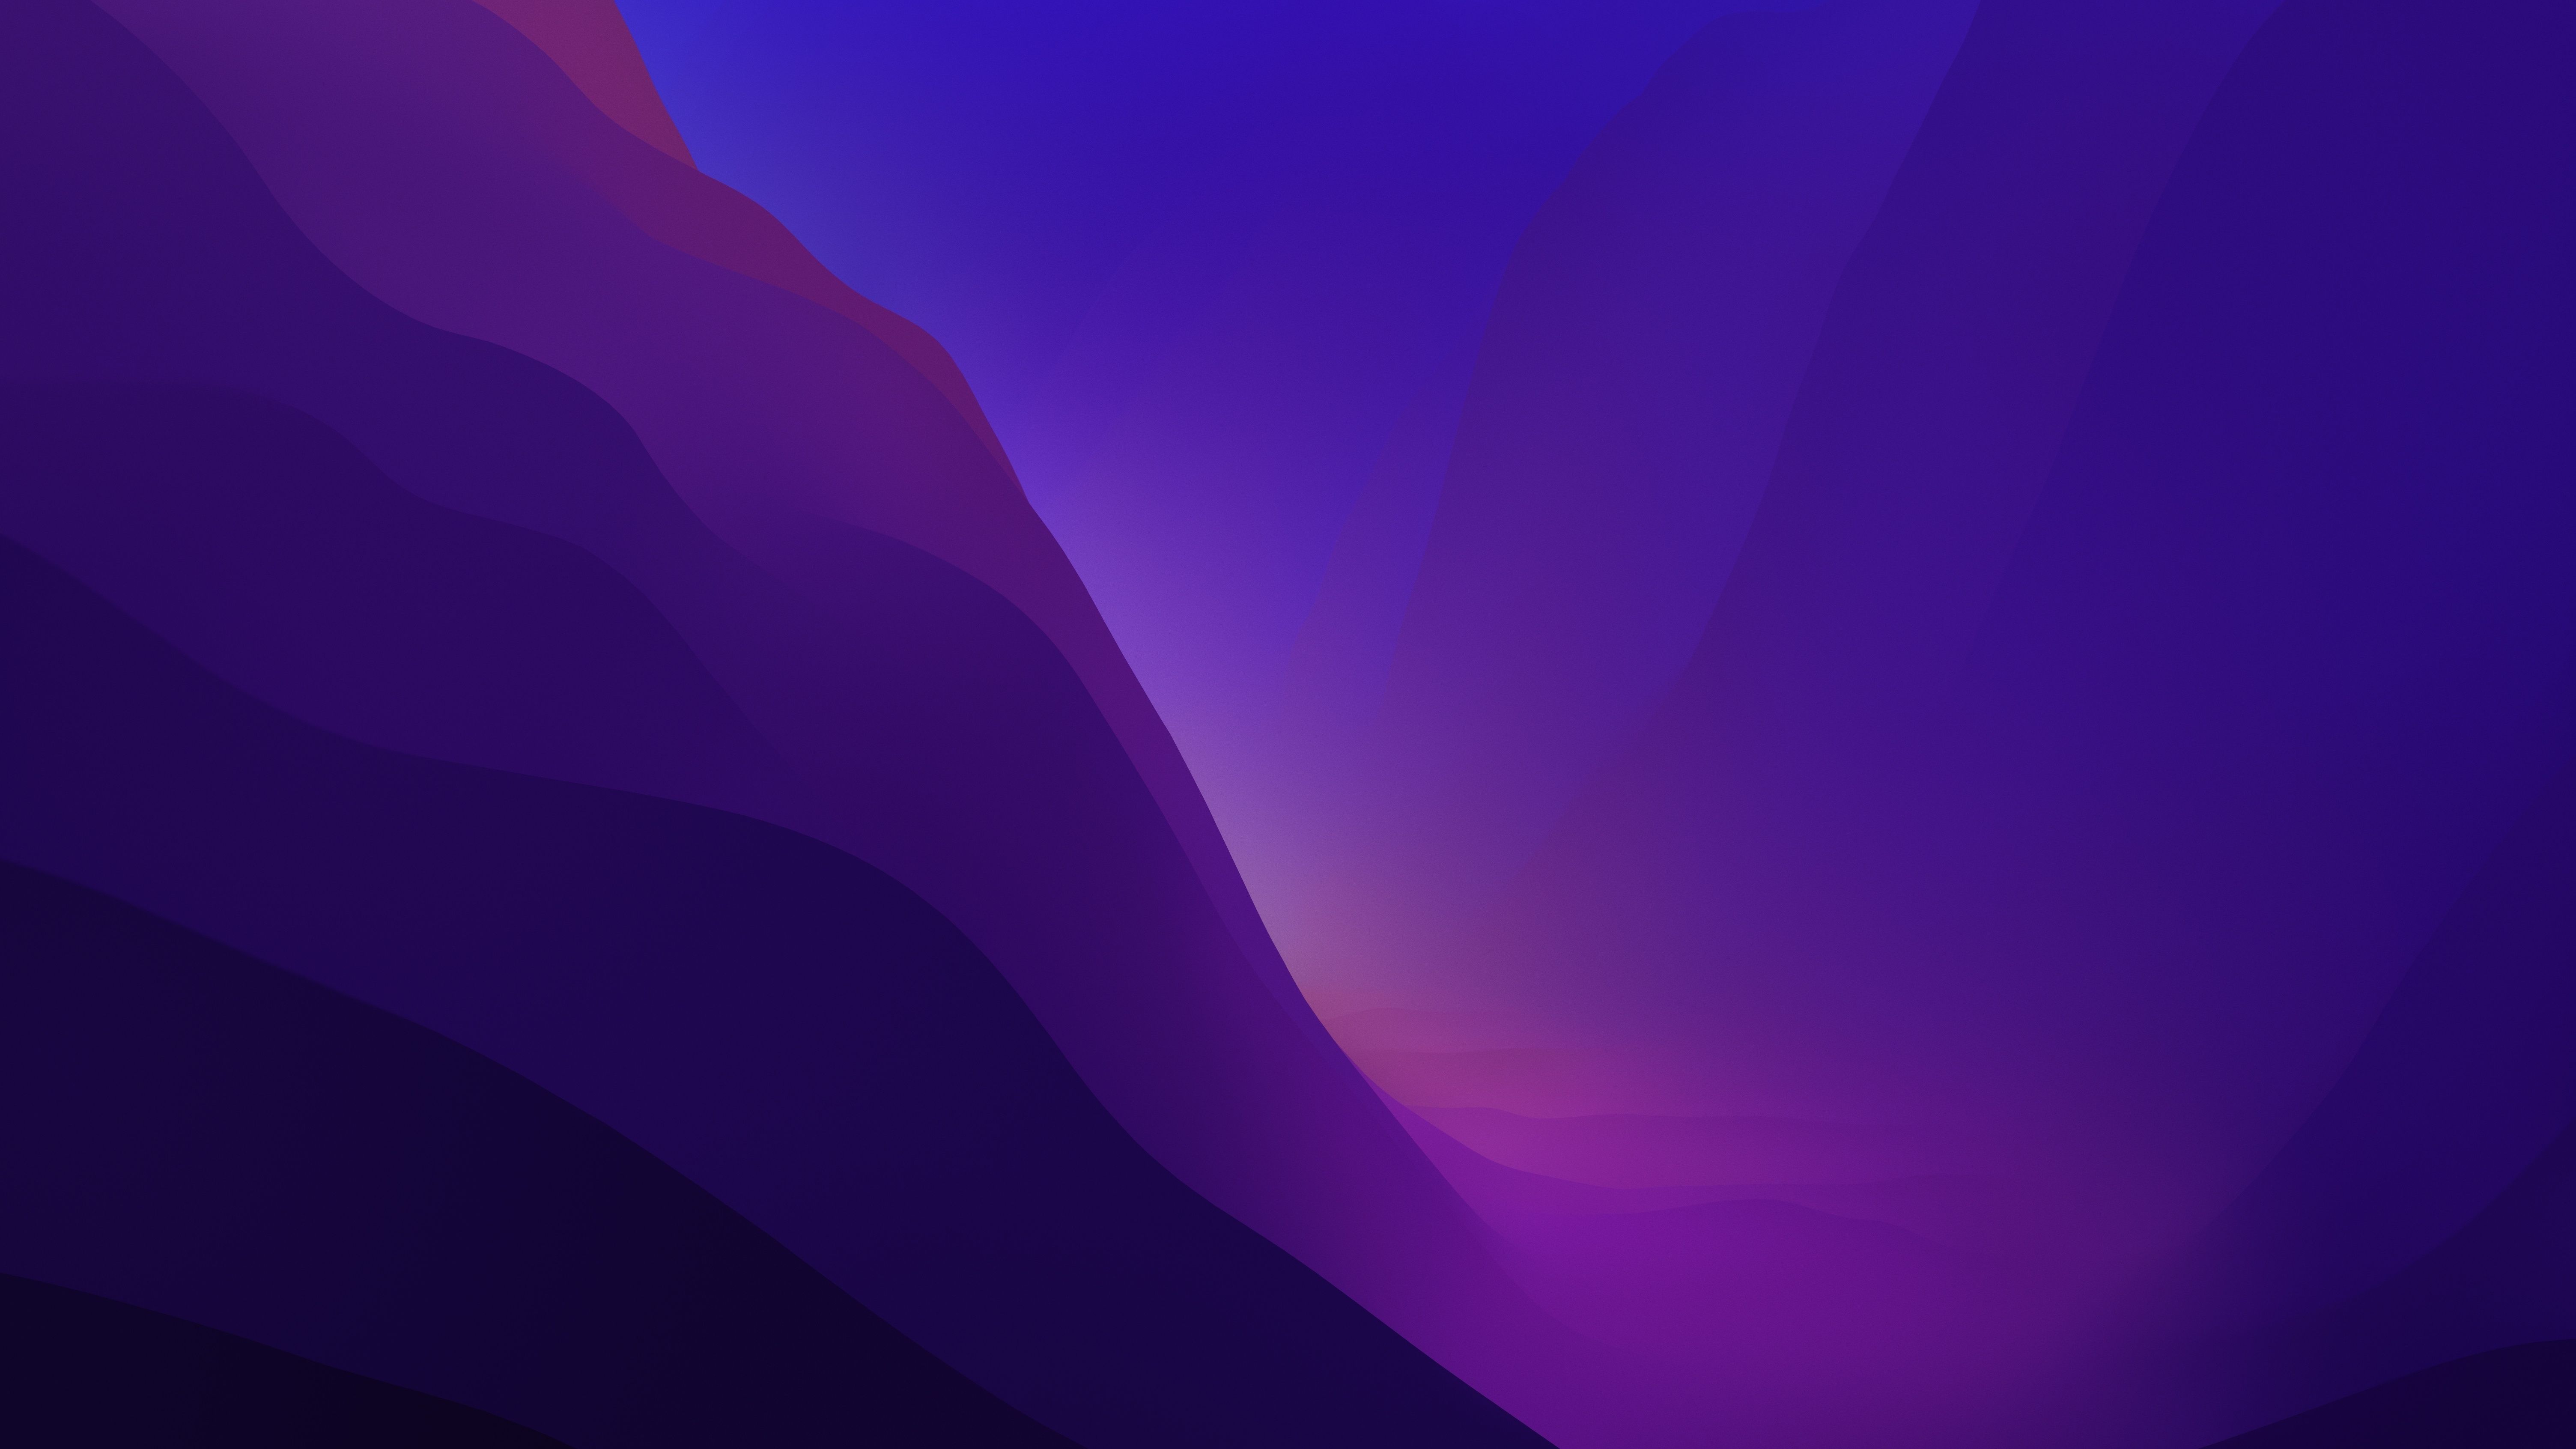 A purple and blue mountain landscape - IMac, indigo